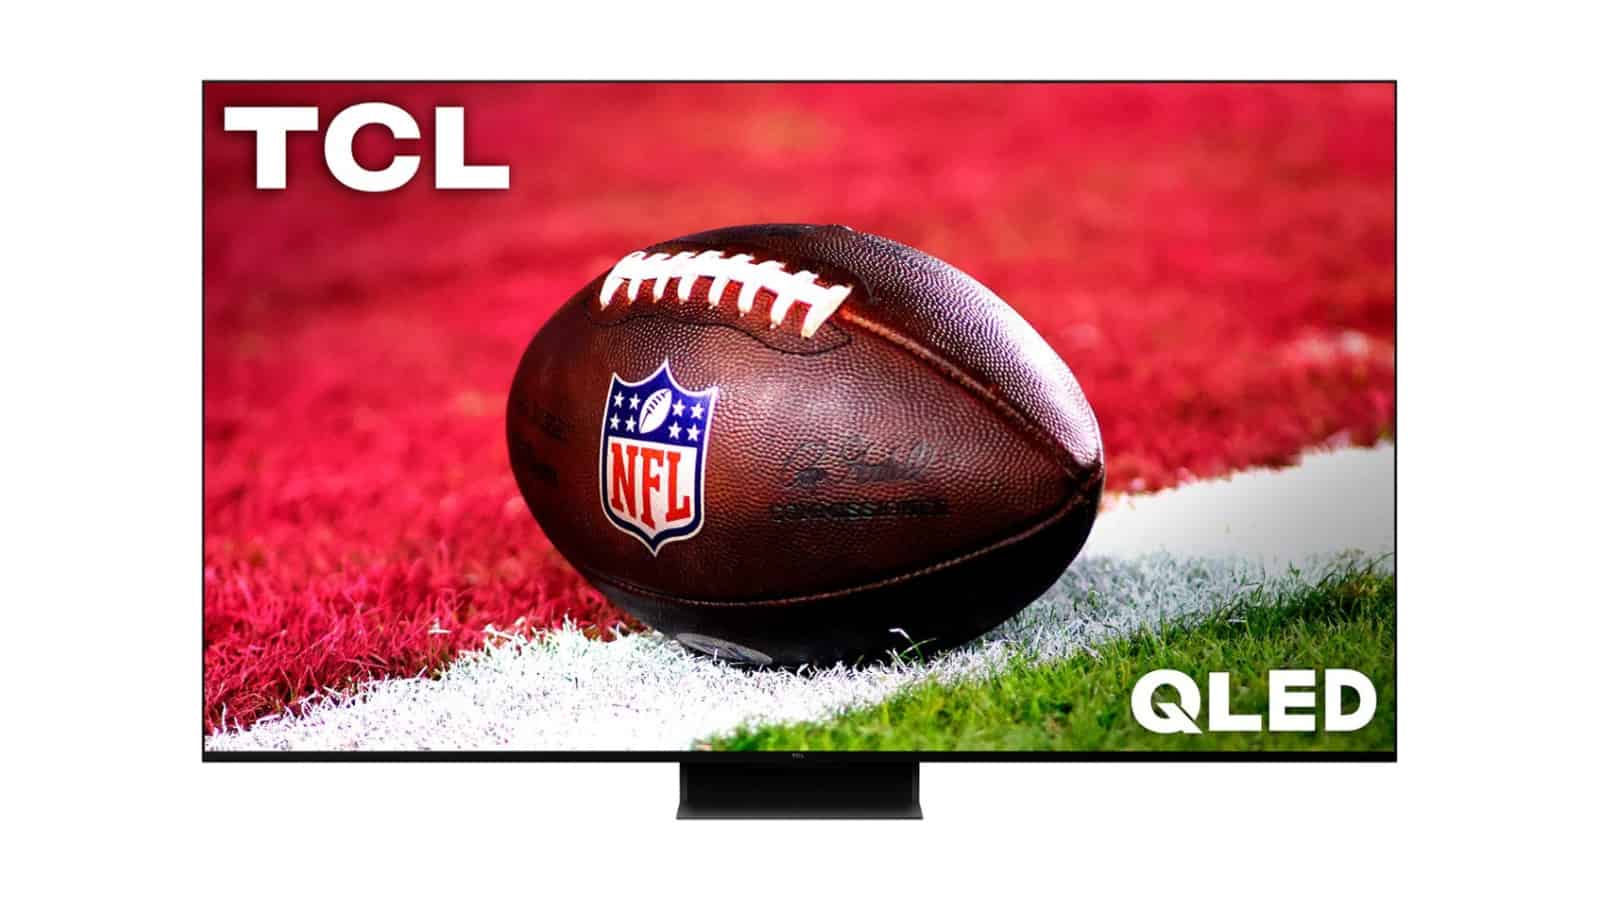 El televisor TCL QM8 Class de 75 pulgadas está rebajado a solo $ 1,300